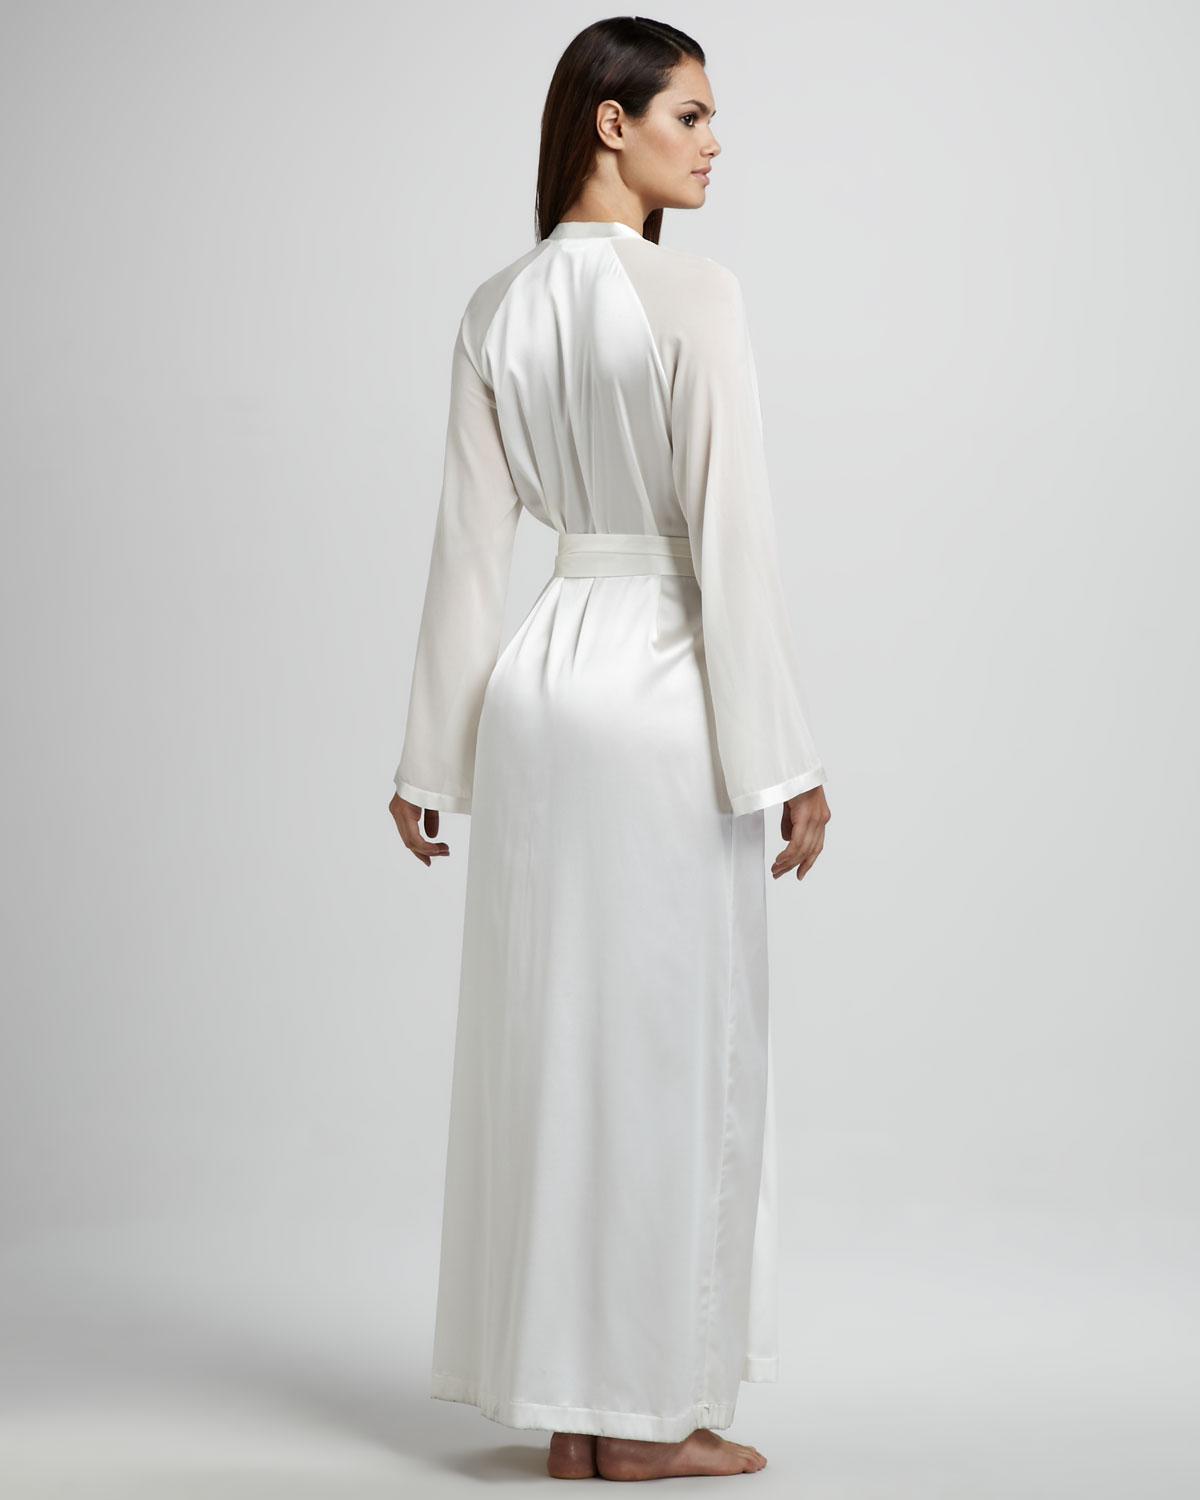 Lyst - La Perla Vestaglie Long Silk Robe Neutral in White